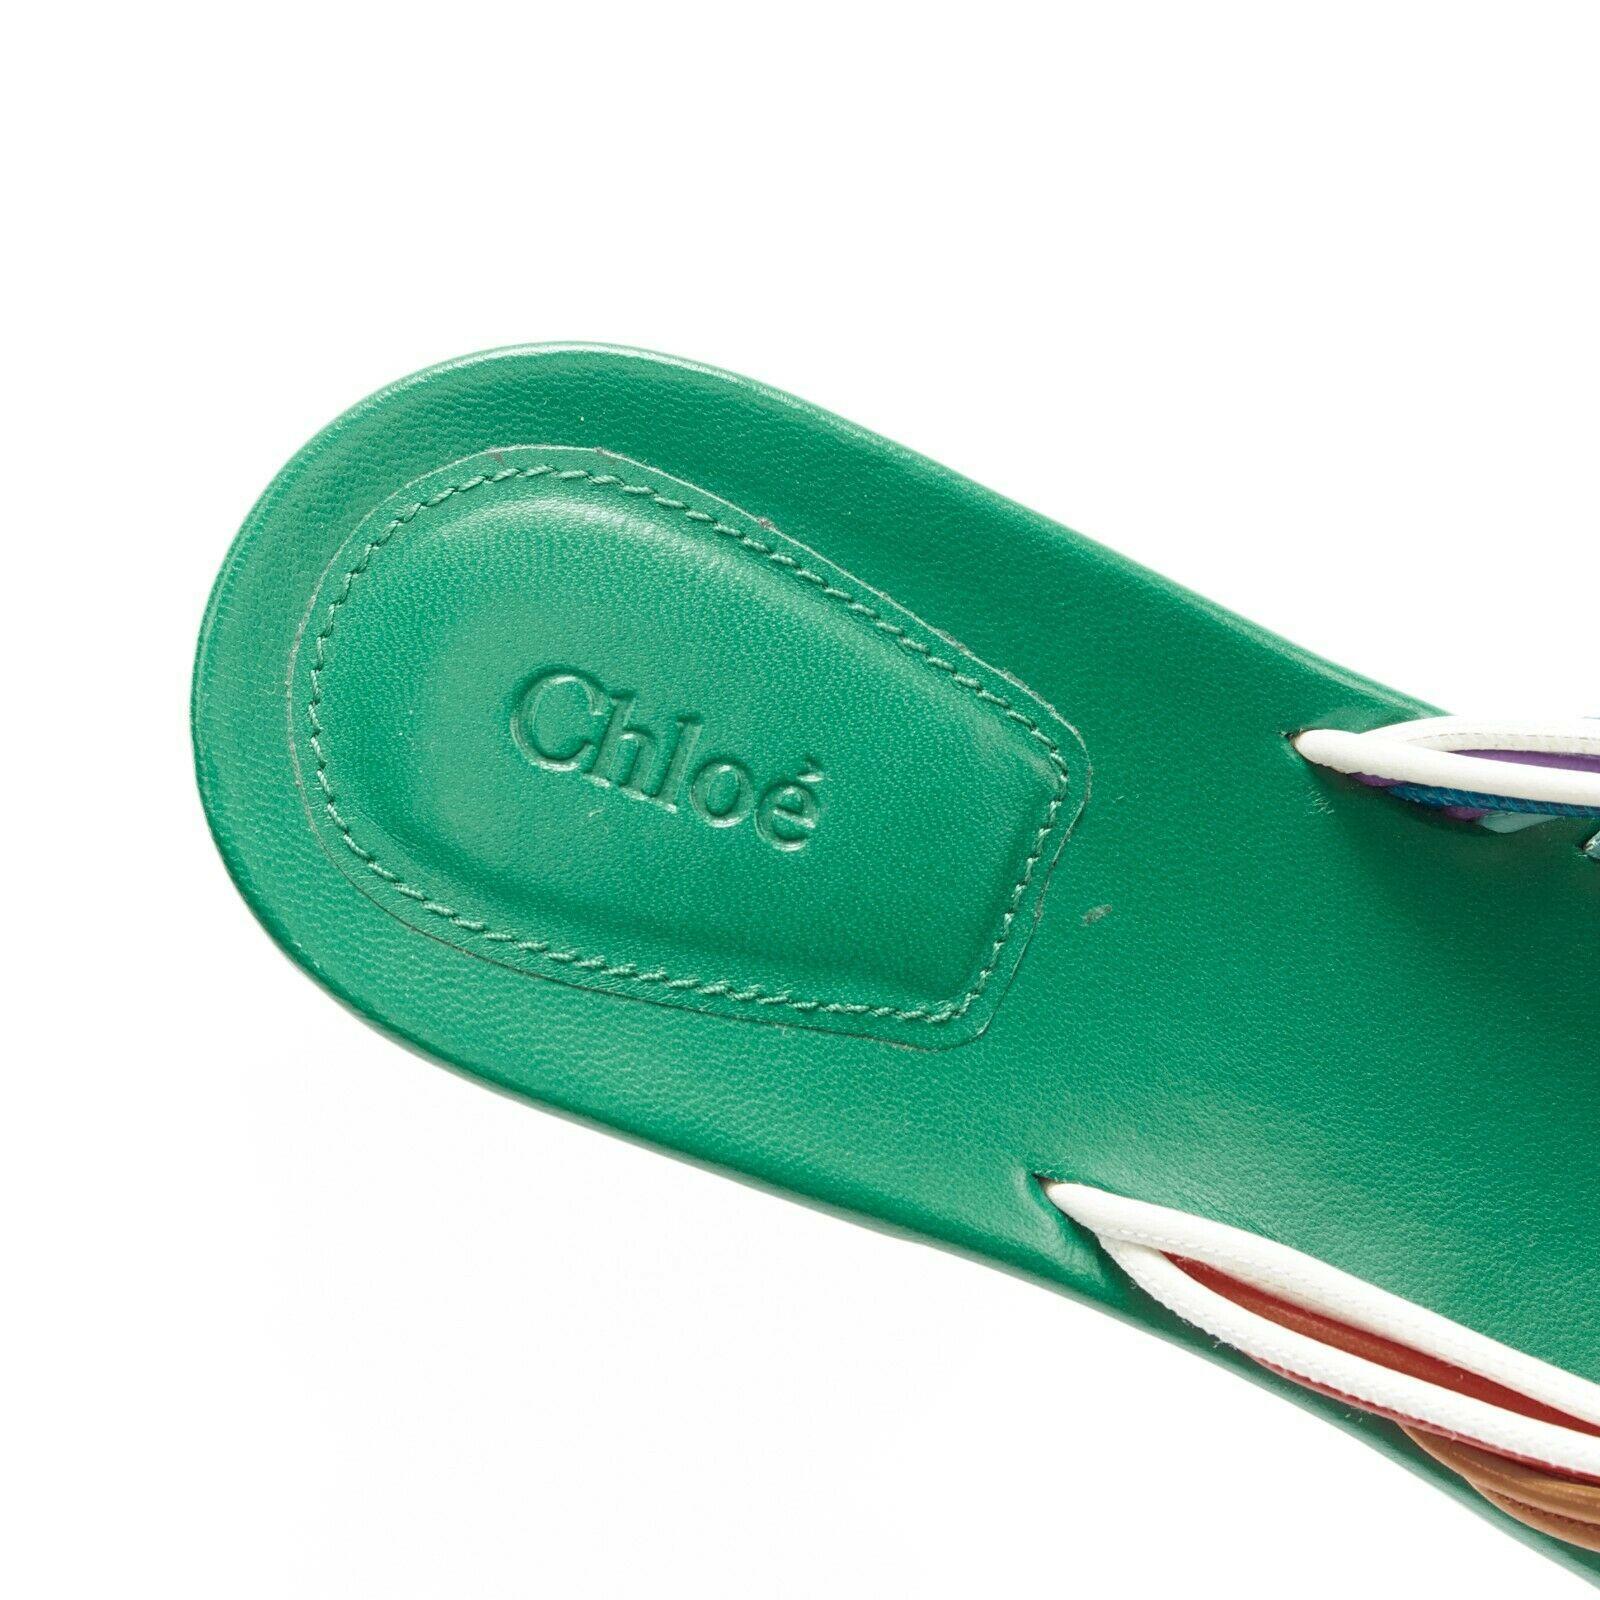 CHLOE SS16 rainbow strappy knotted open toe cork platform slide sandals EU39 3